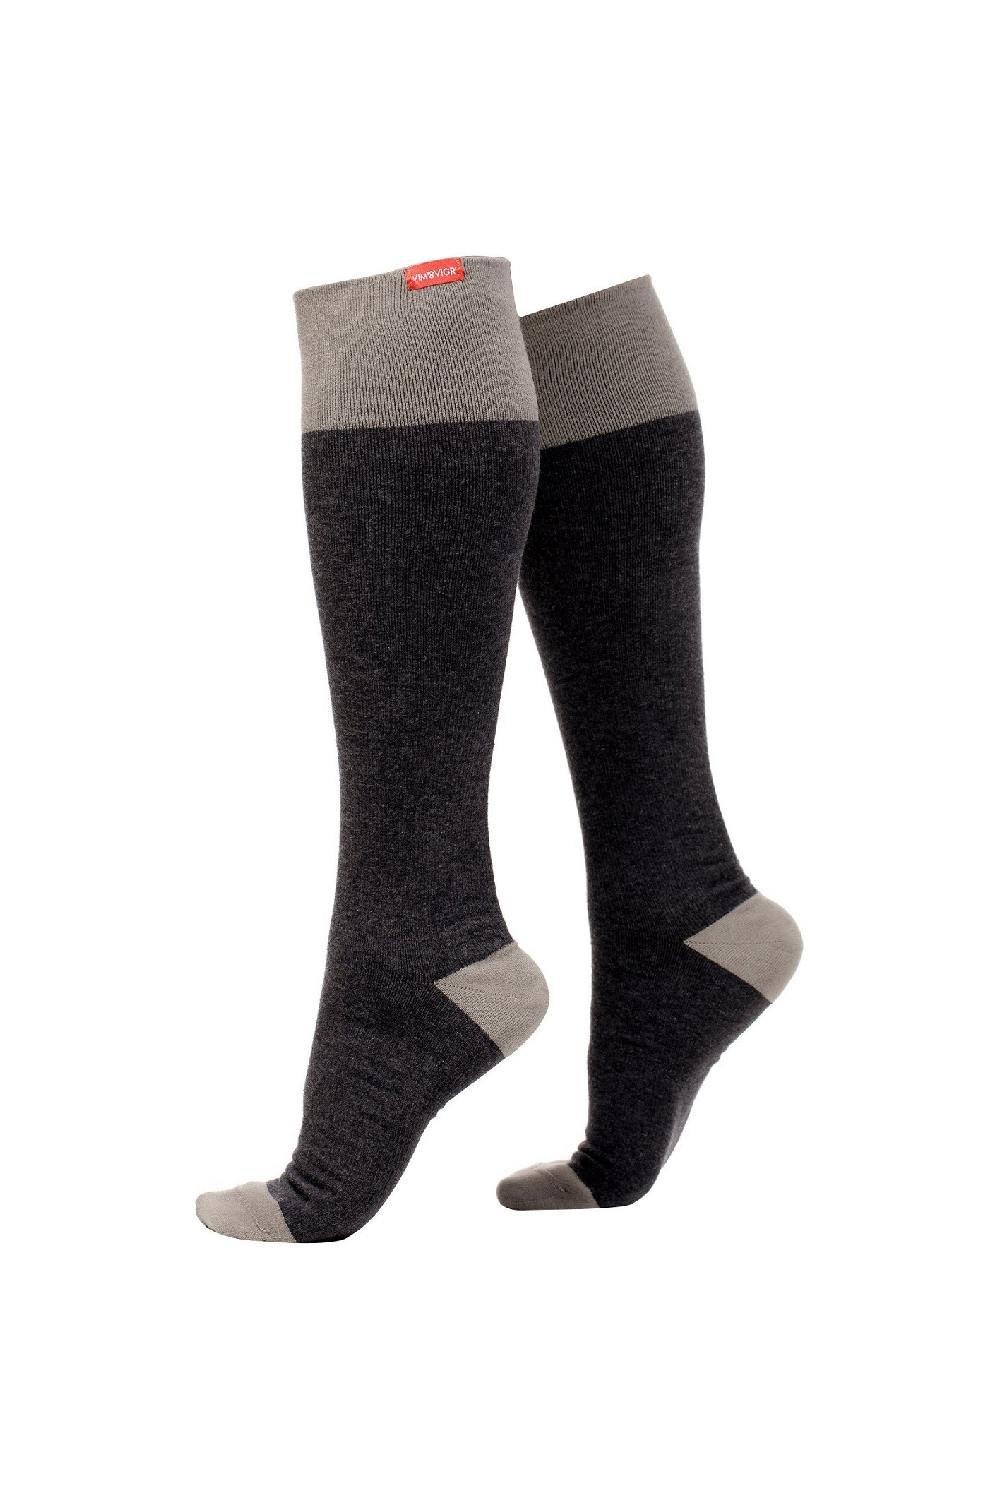 Wide Calf Graduated Compression Socks 15-20 mmhg for Swollen Legs